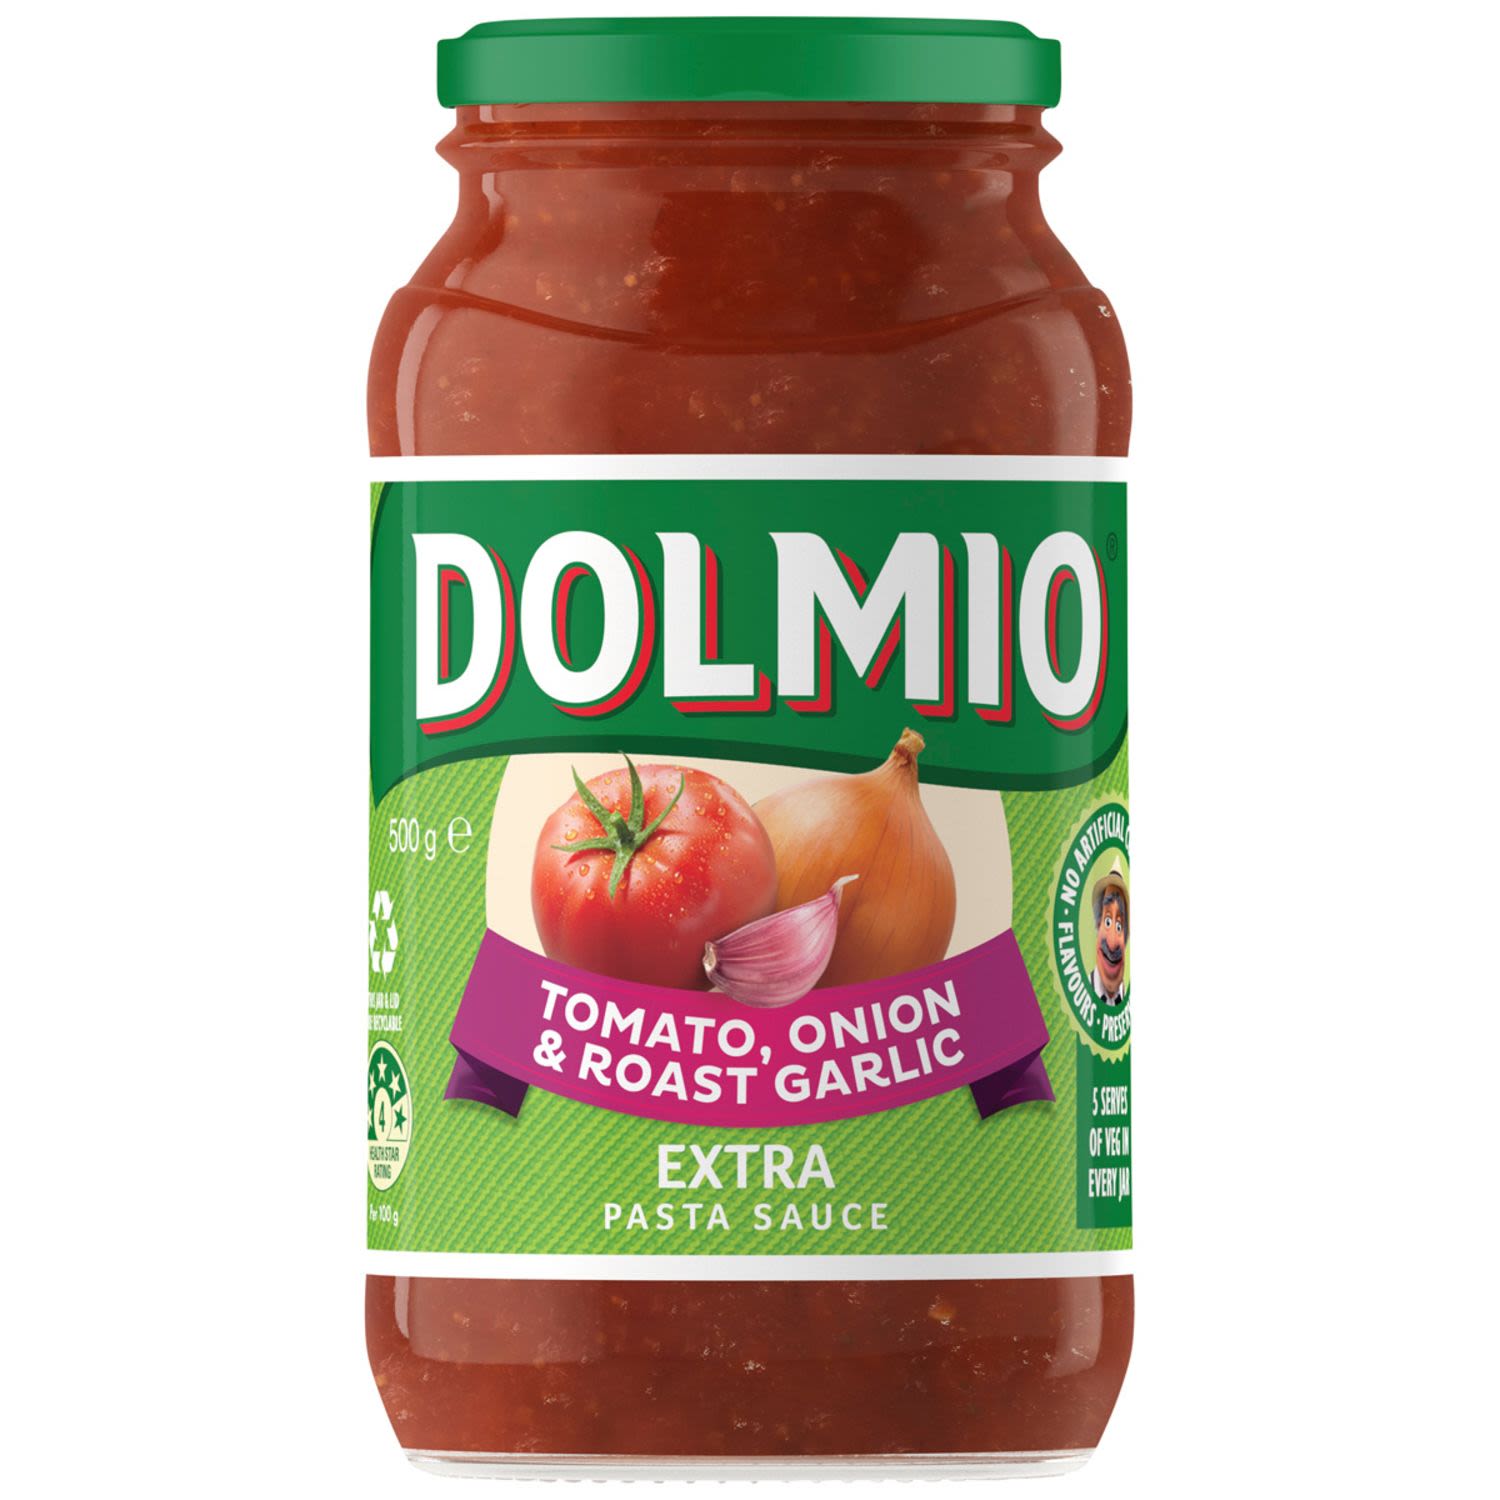 Dolmio Extra Tomato Onion & Roast Garlic Pasta Sauce, 500 Gram